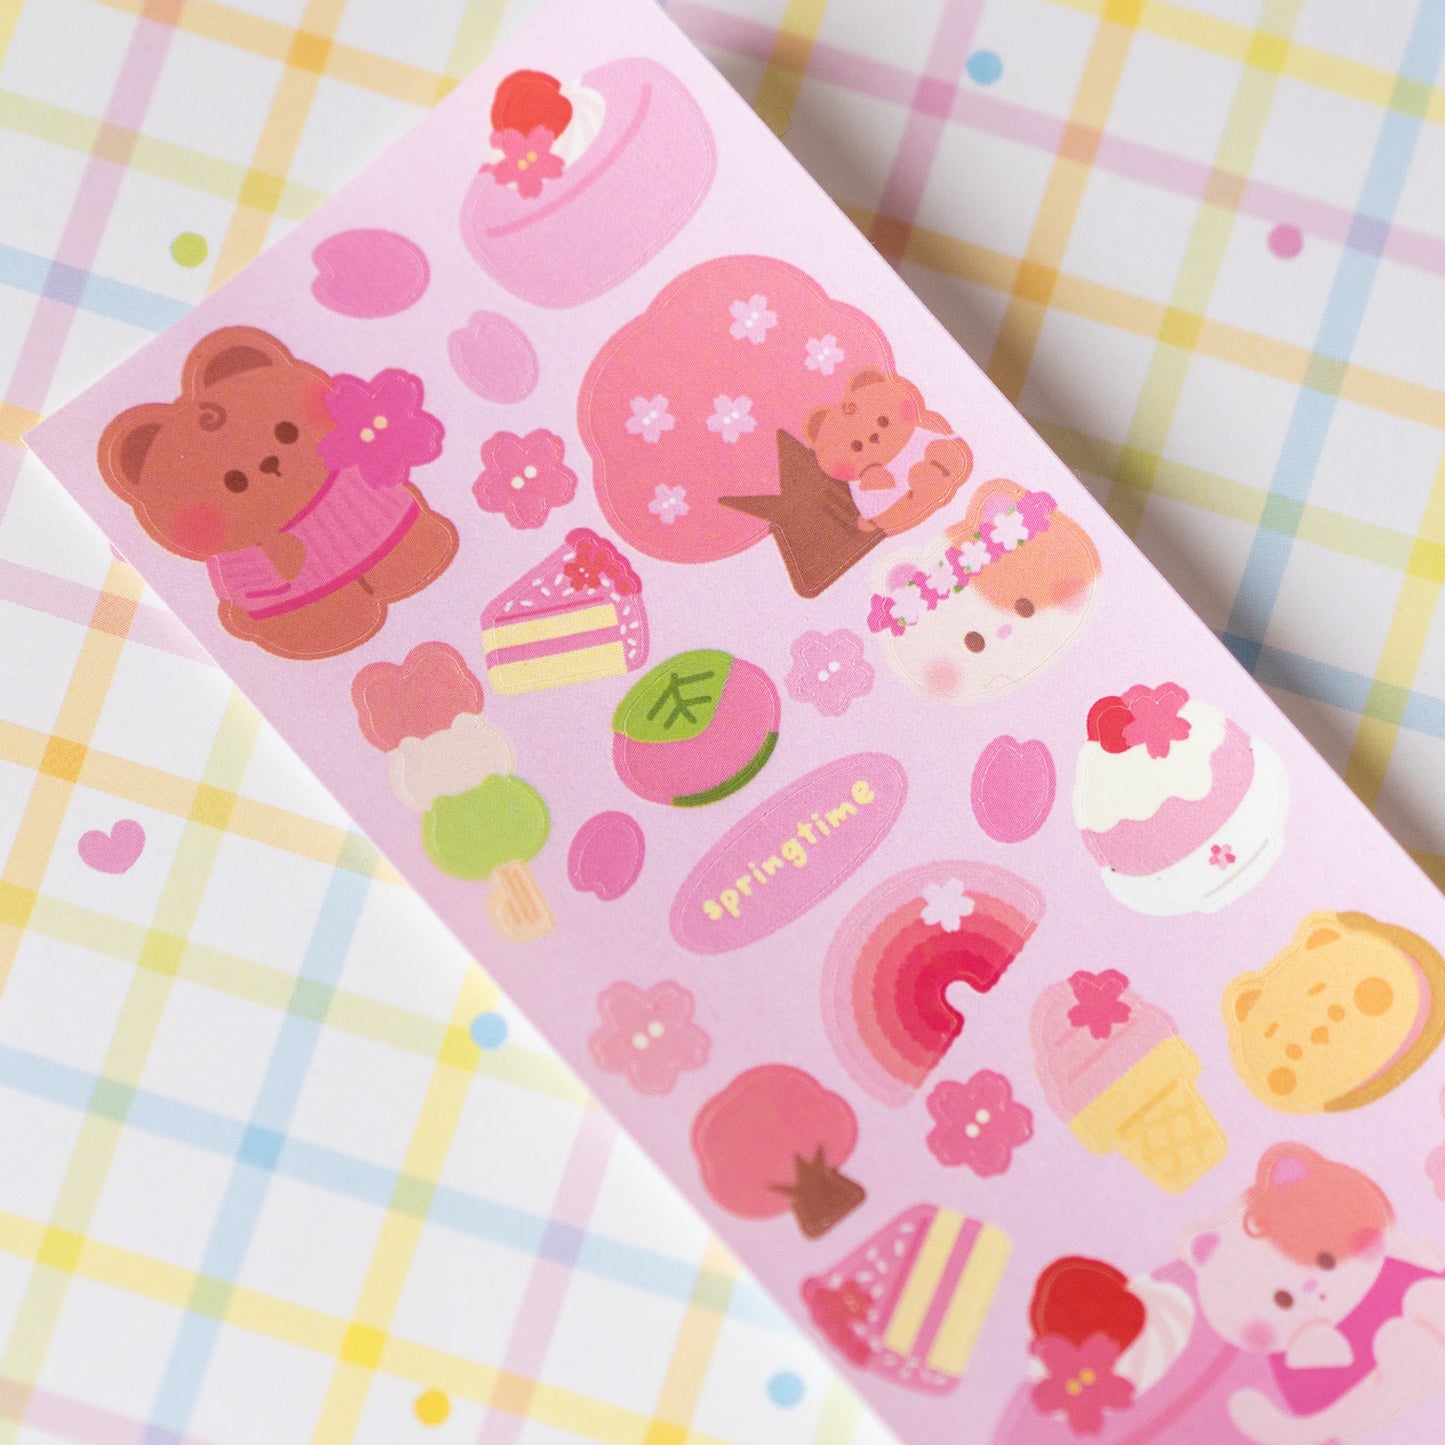 Minty Babies Sakura Hanami Spring Cherry Blossom Deco Journal Sticker Sheet